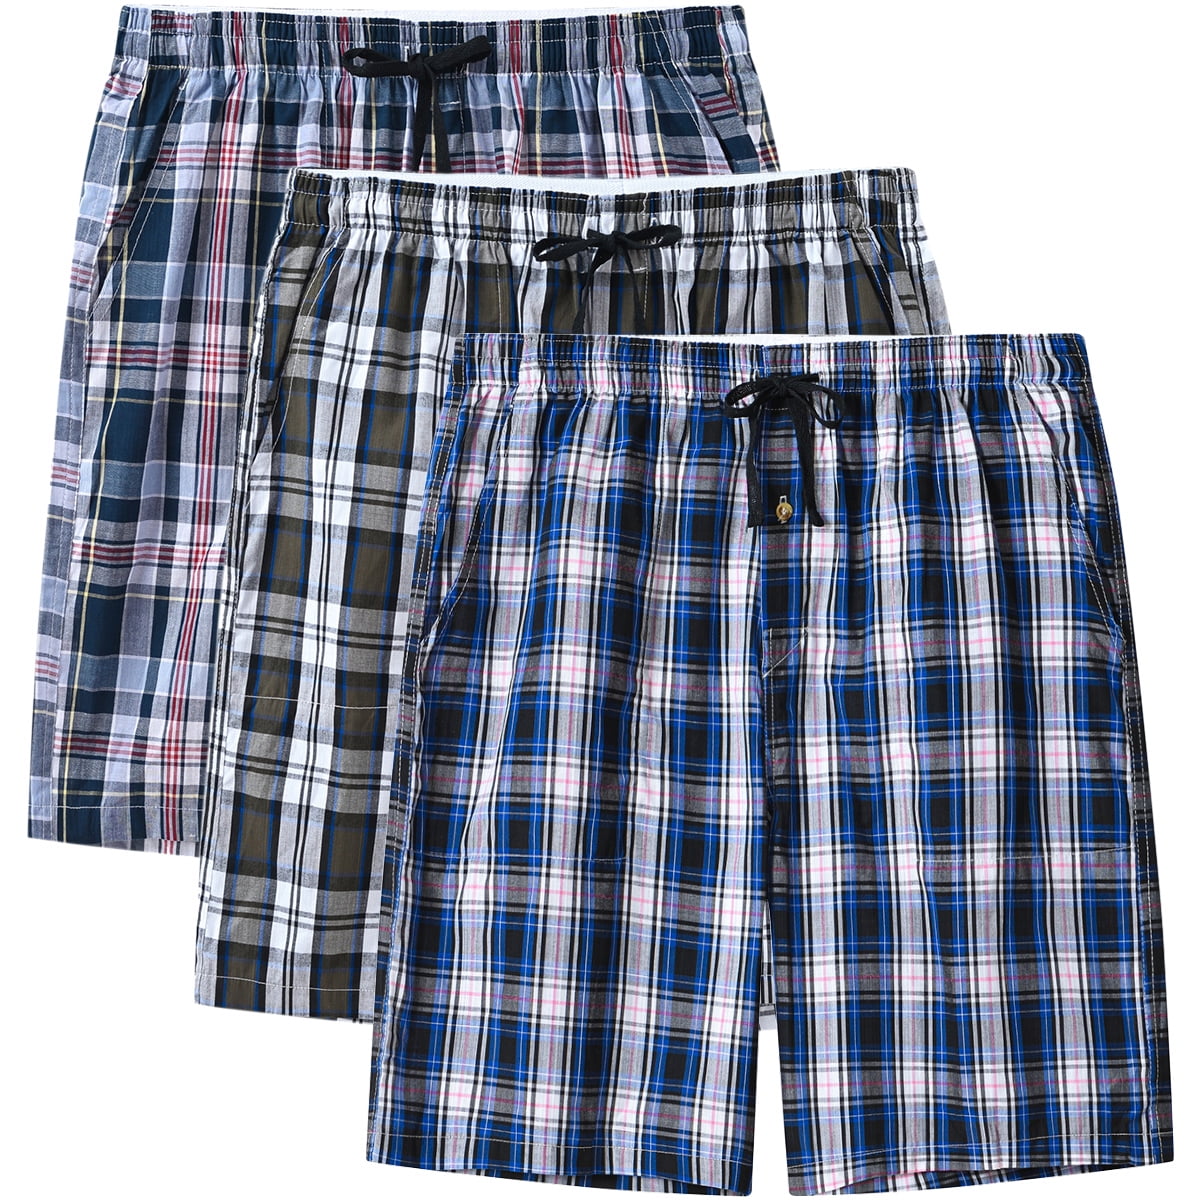 MoFiz Mens Sleeping Stretch Boxer Shorts Ultra-Soft Modal Lounge Pajama Bottoms with Pockets